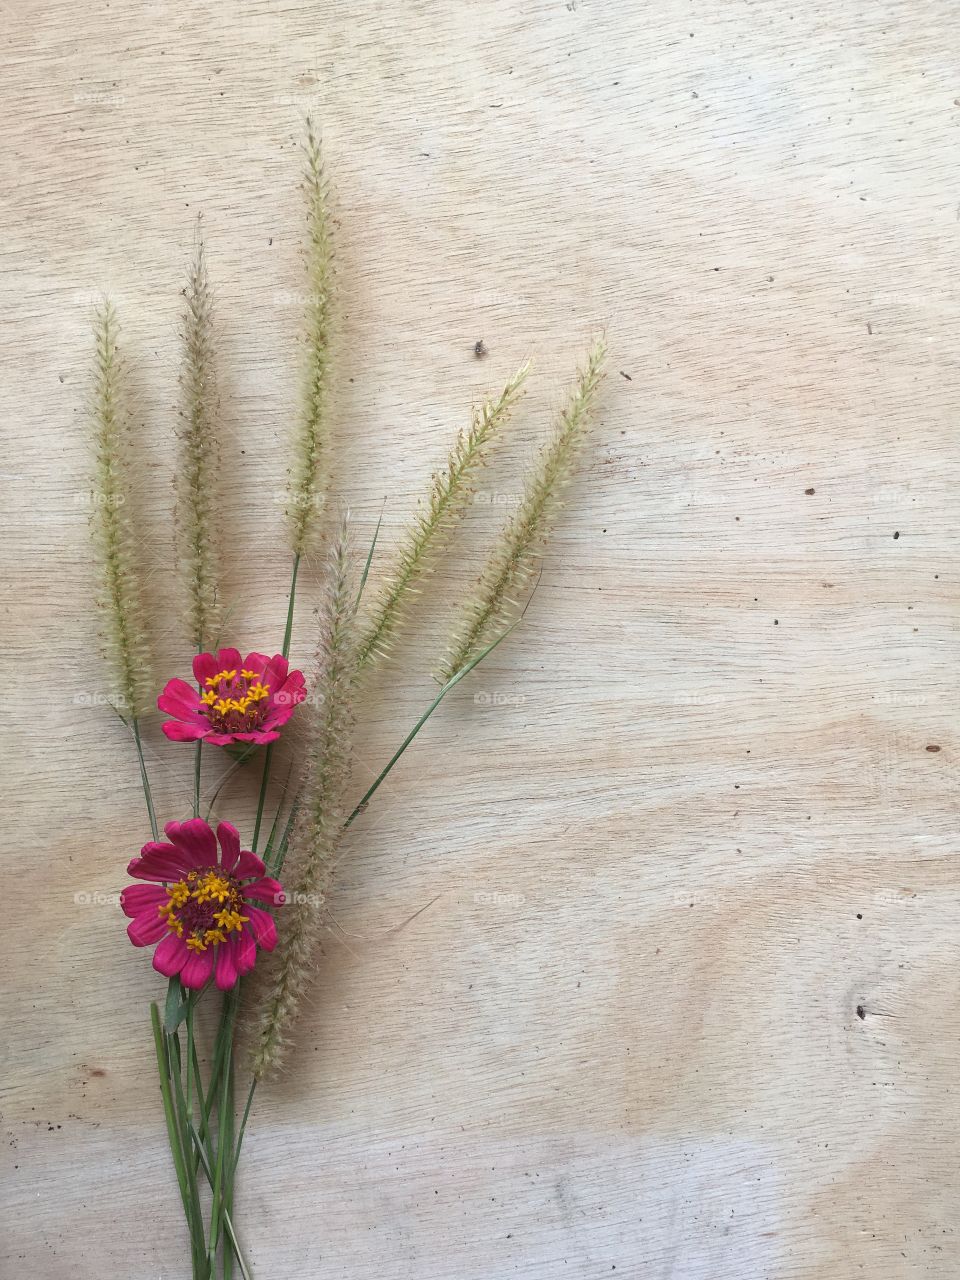 Zinnia and grass flower on wood floor